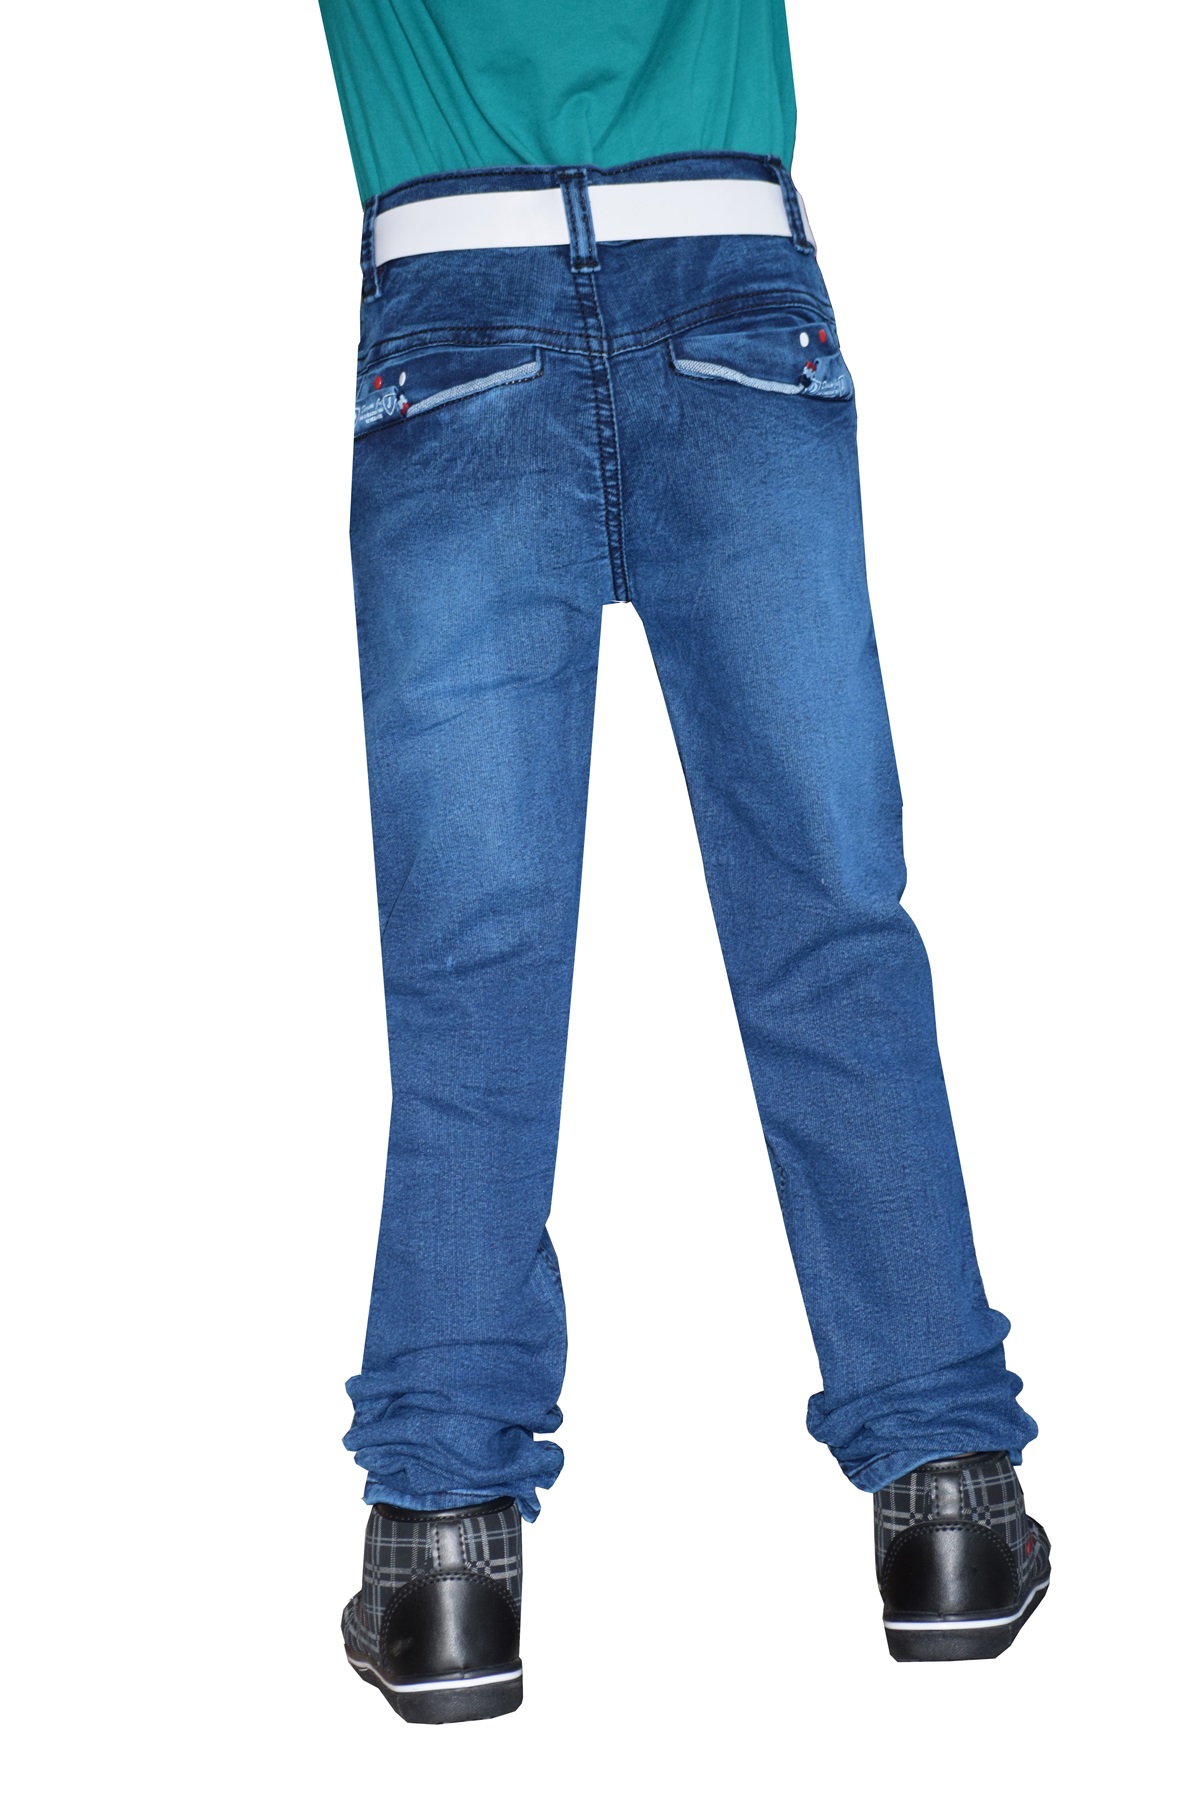 Buy Tara Lifestyle Slim Fit Denim Jeans Pant for Kids-Boys Jeans Pant ...